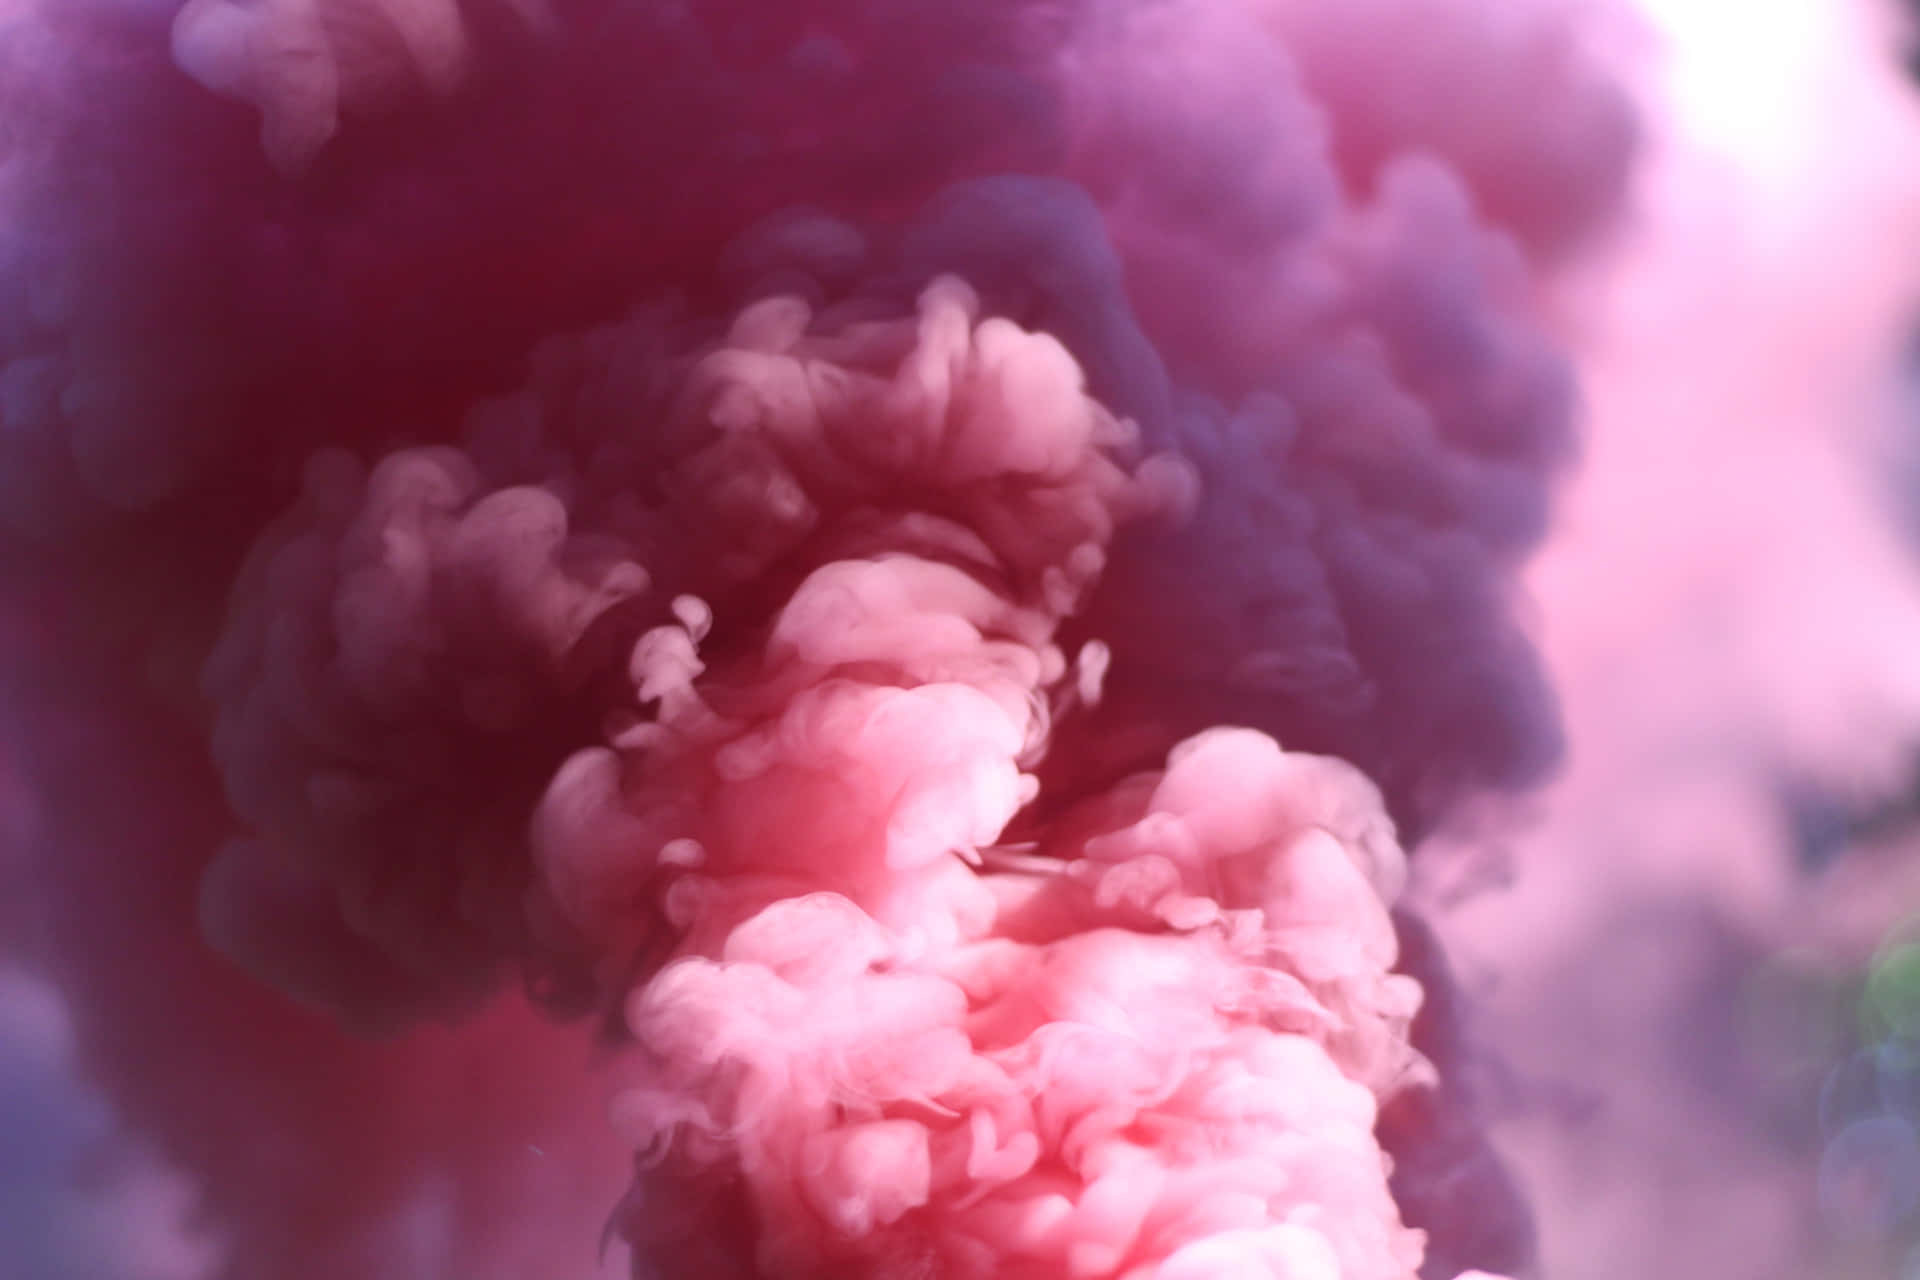 "A beautiful swirl of pink smoke hangs in the air."